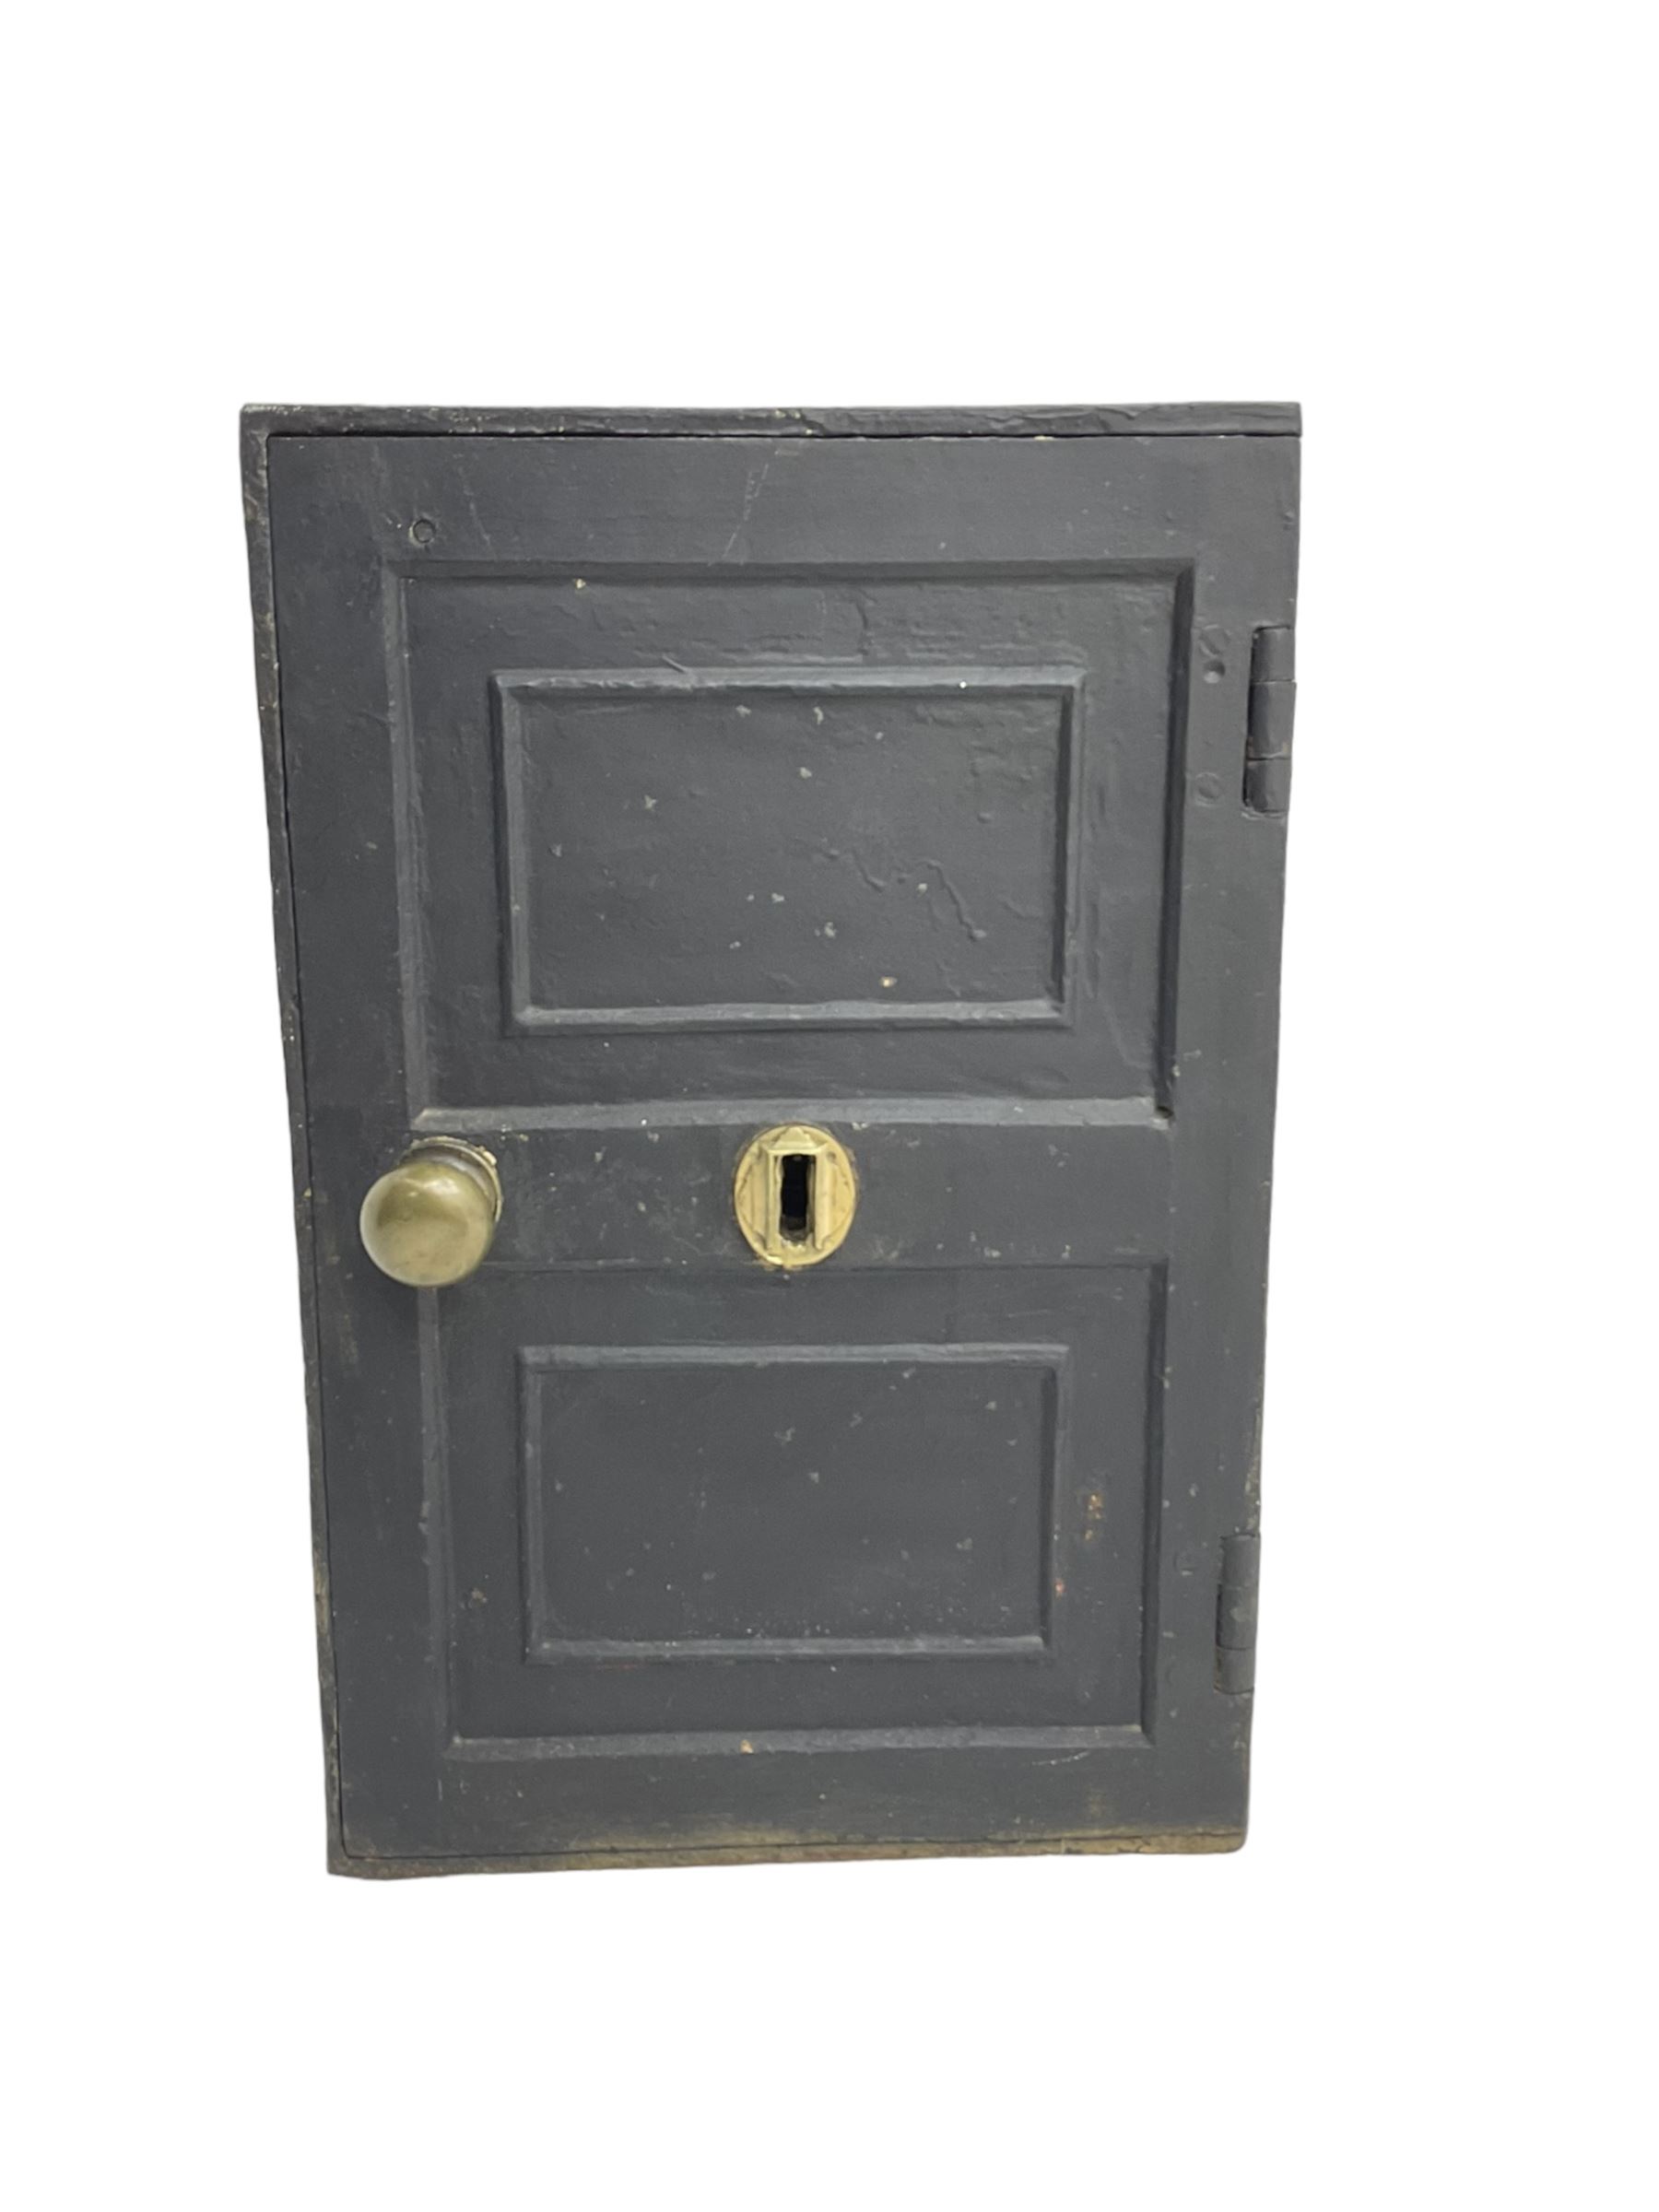 Black painted cast iron safe